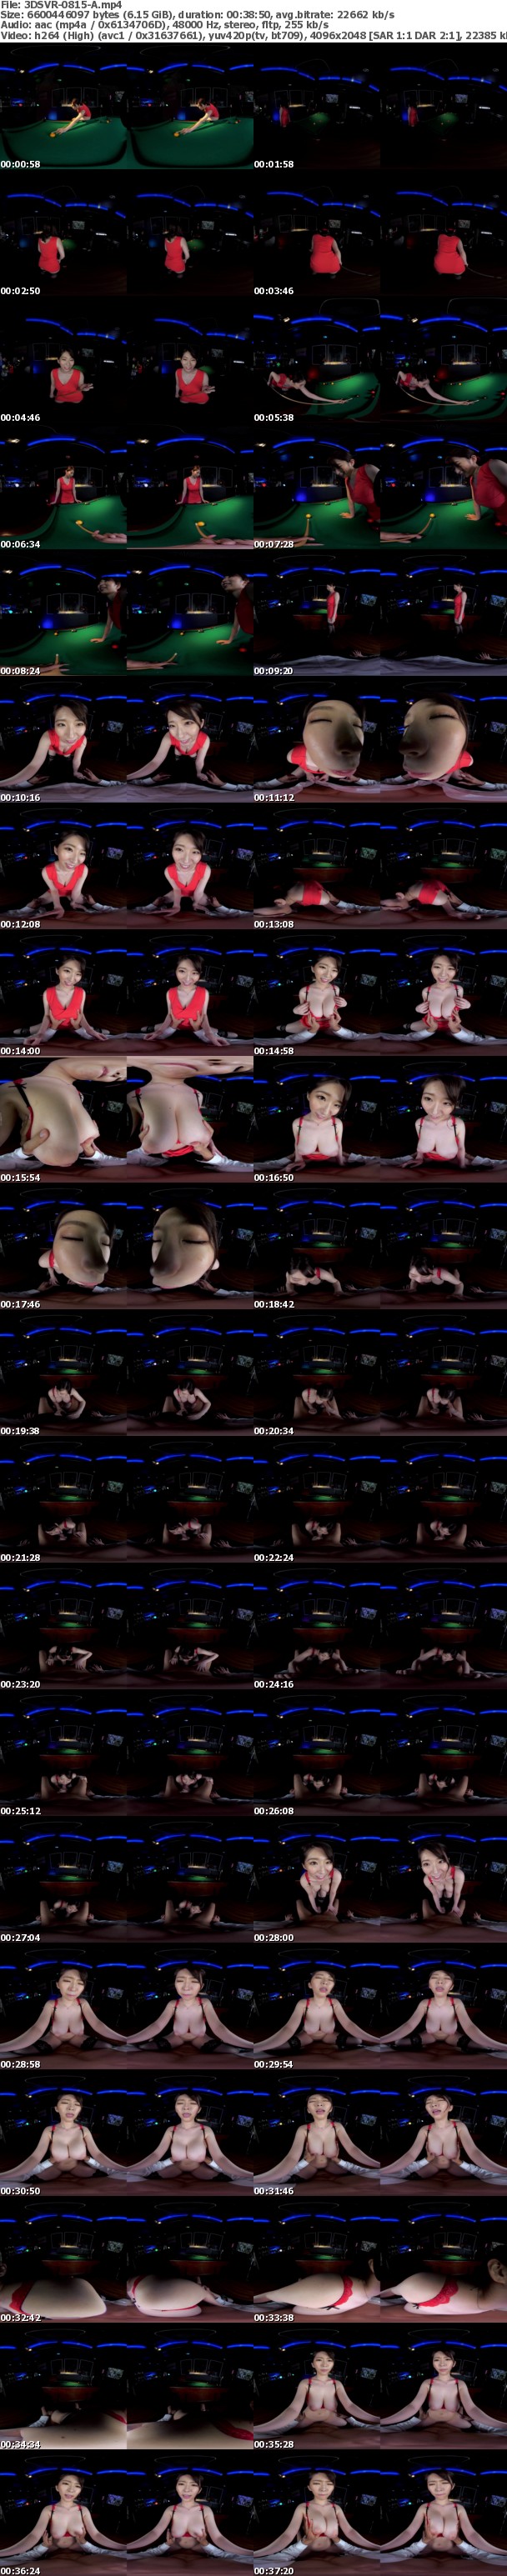 (VR) 3DSVR-0815 誘惑ビリヤードをするグラマラスボディの爆乳美女